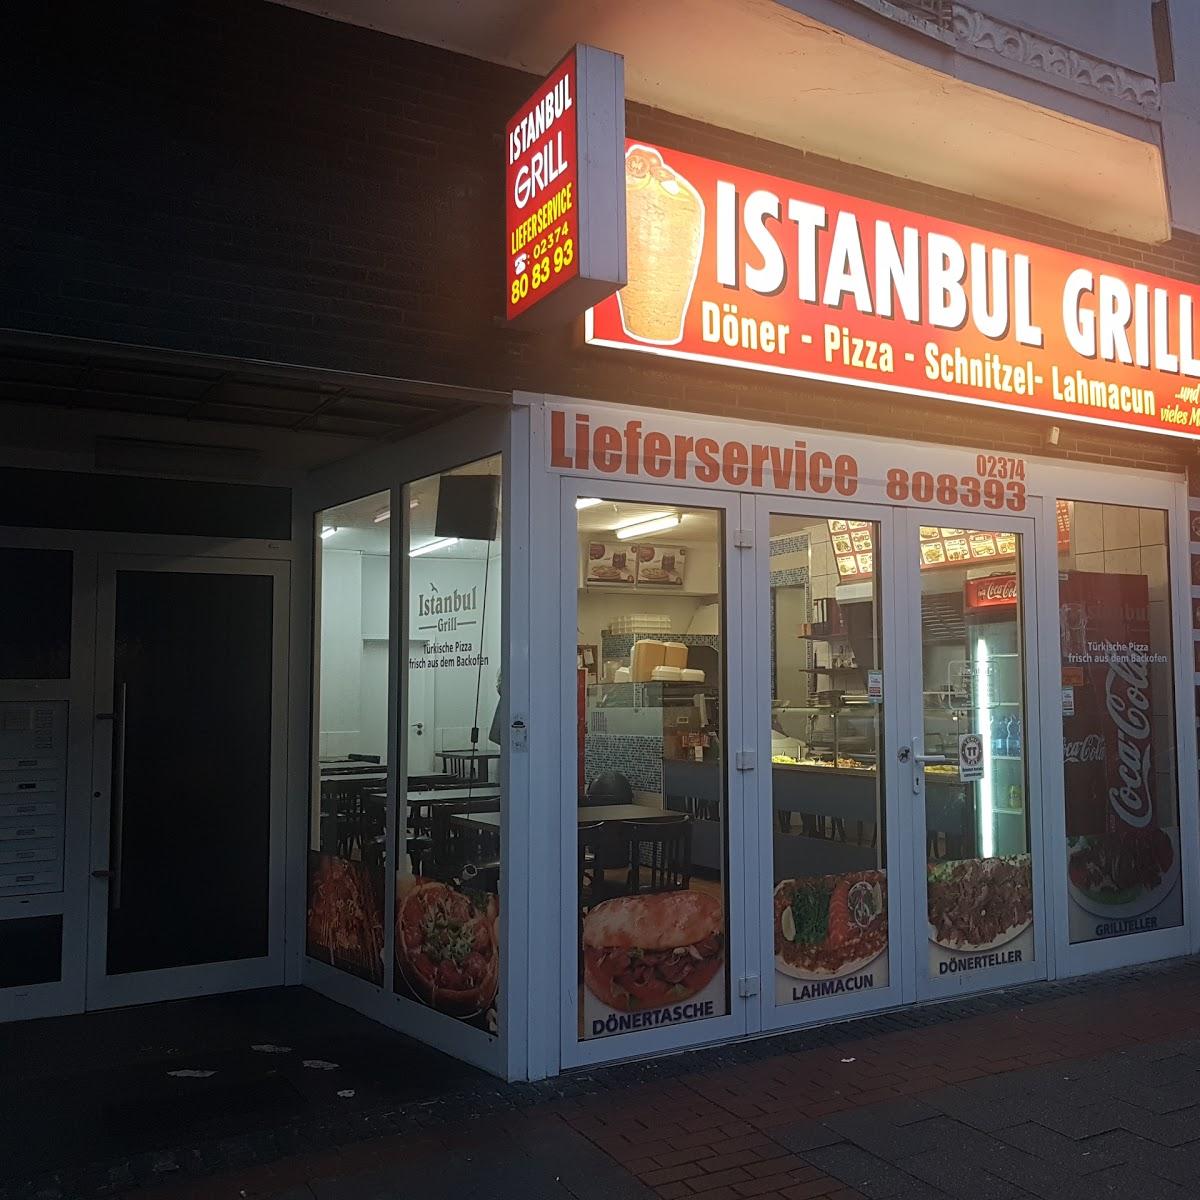 Restaurant "Grill Istanbul" in Iserlohn